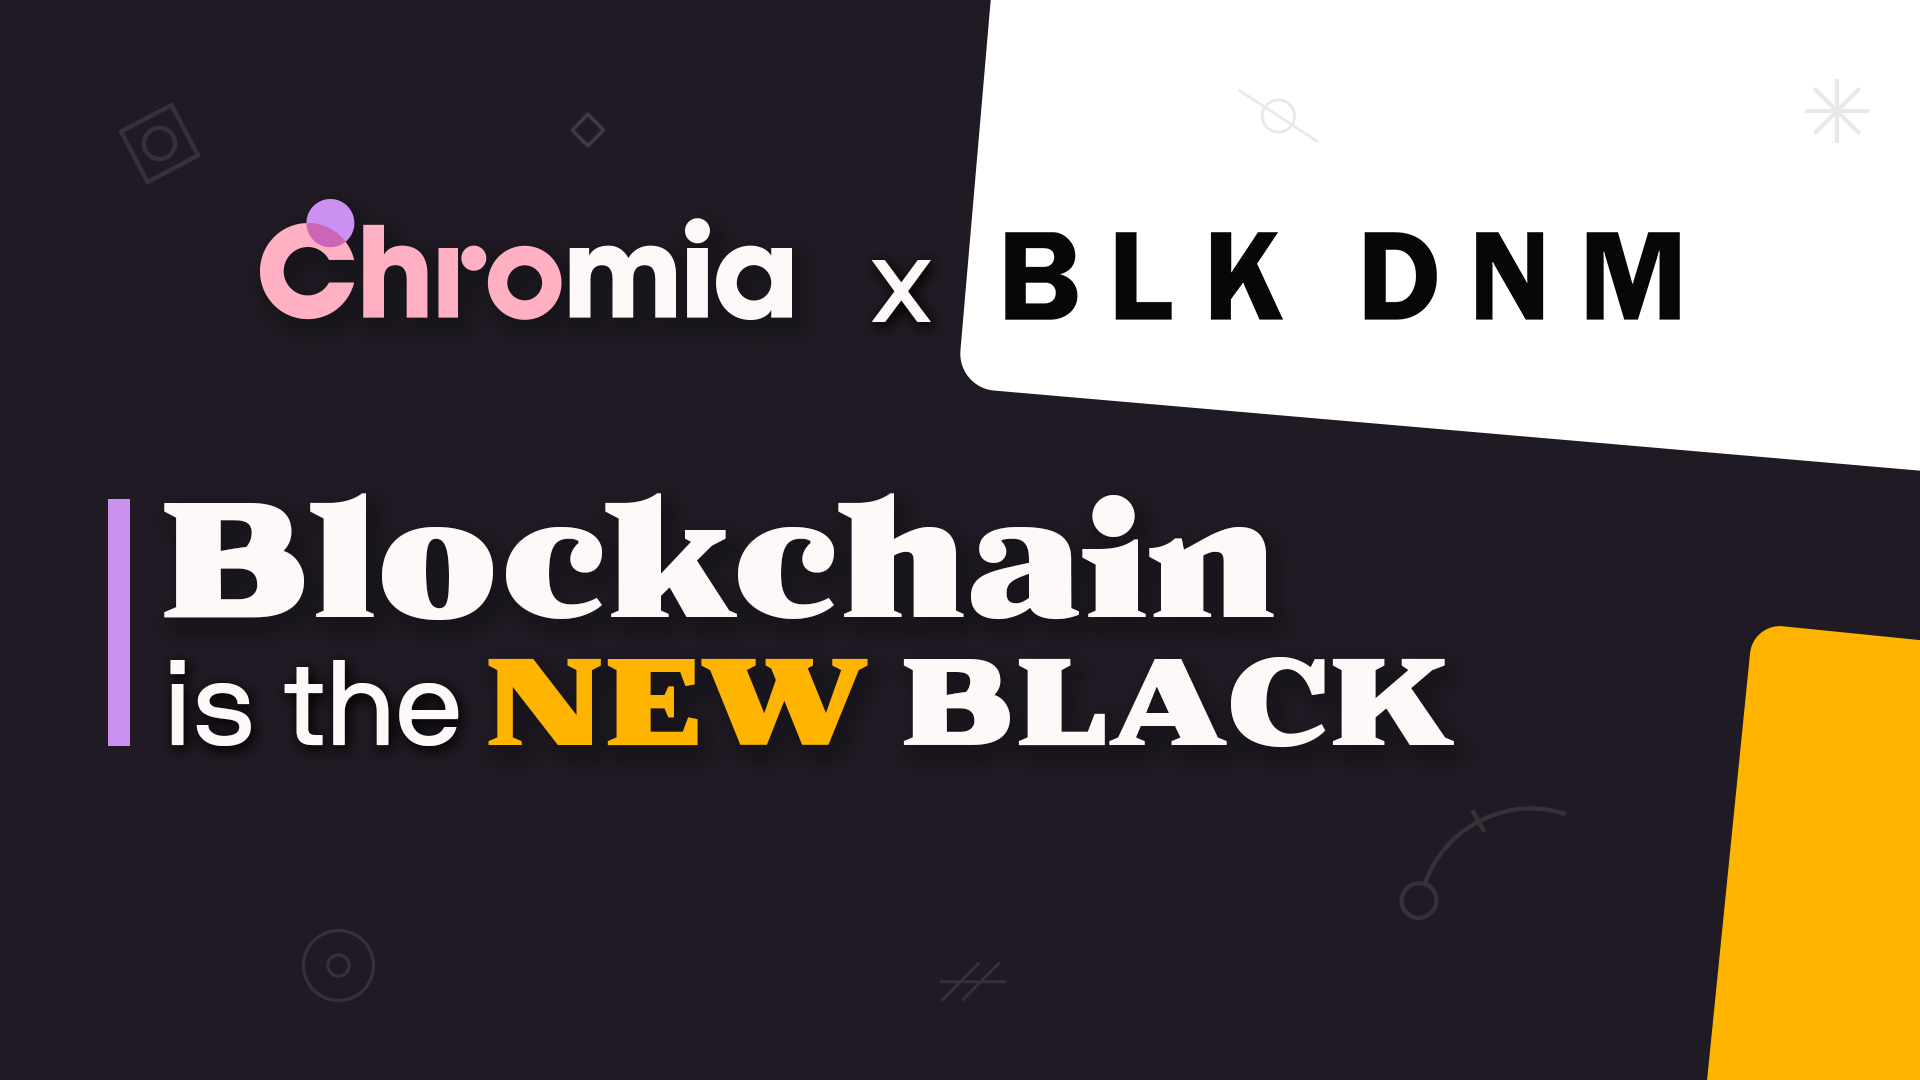 Blockchain is the New Black: Chromia x BLK DNM